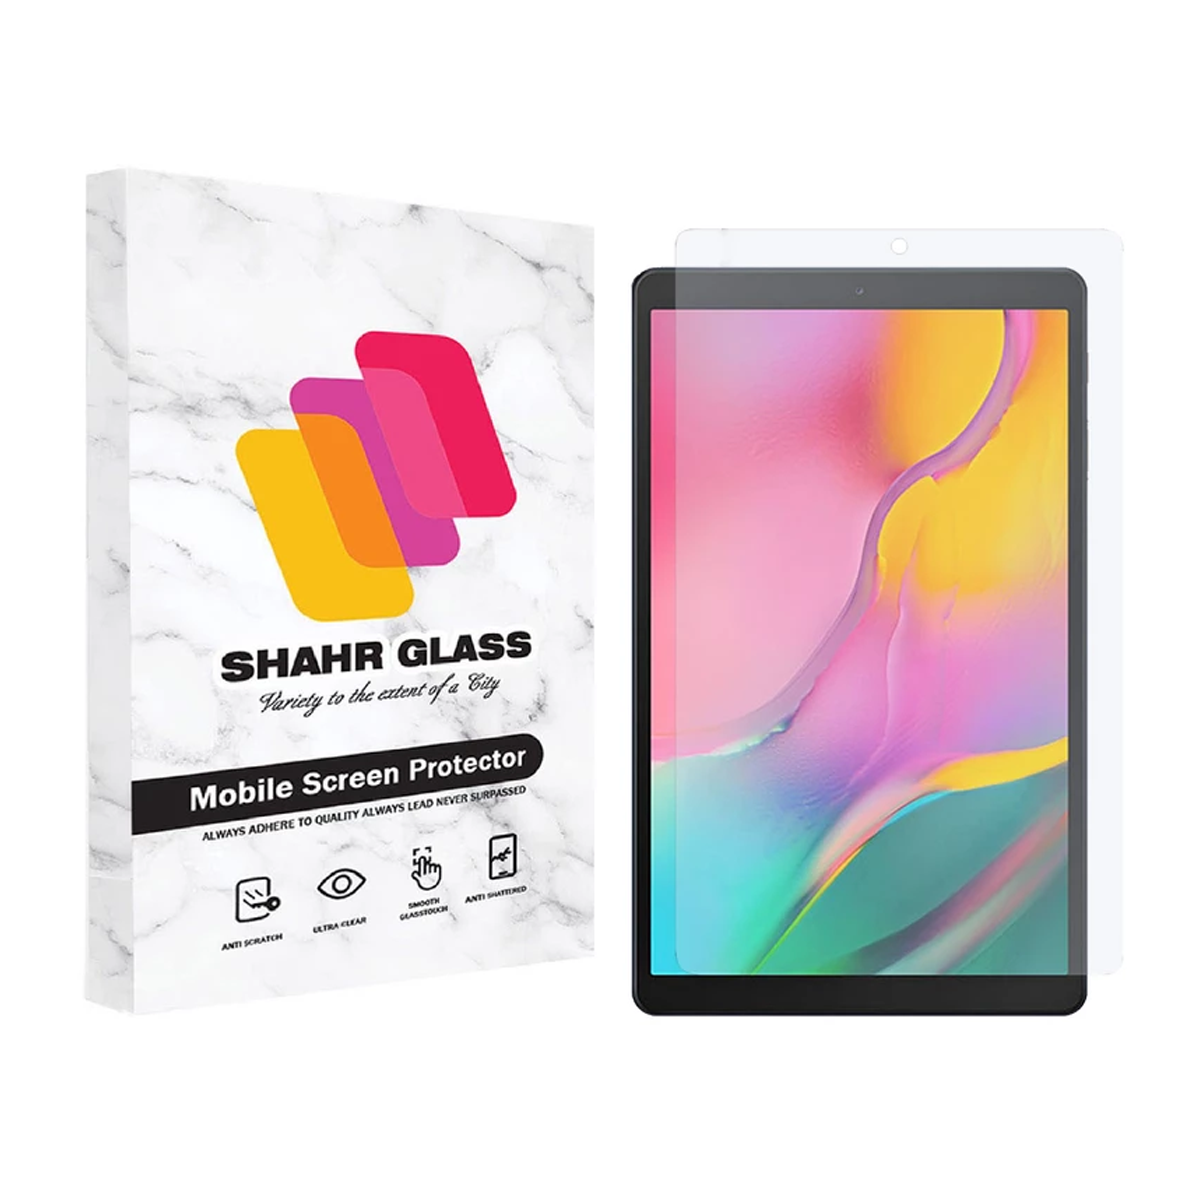 گلس تبلت سامسونگ Galaxy Tab A 10.1 2019 شهر گلس مدل SMPT2 -بی رنگ شفاف